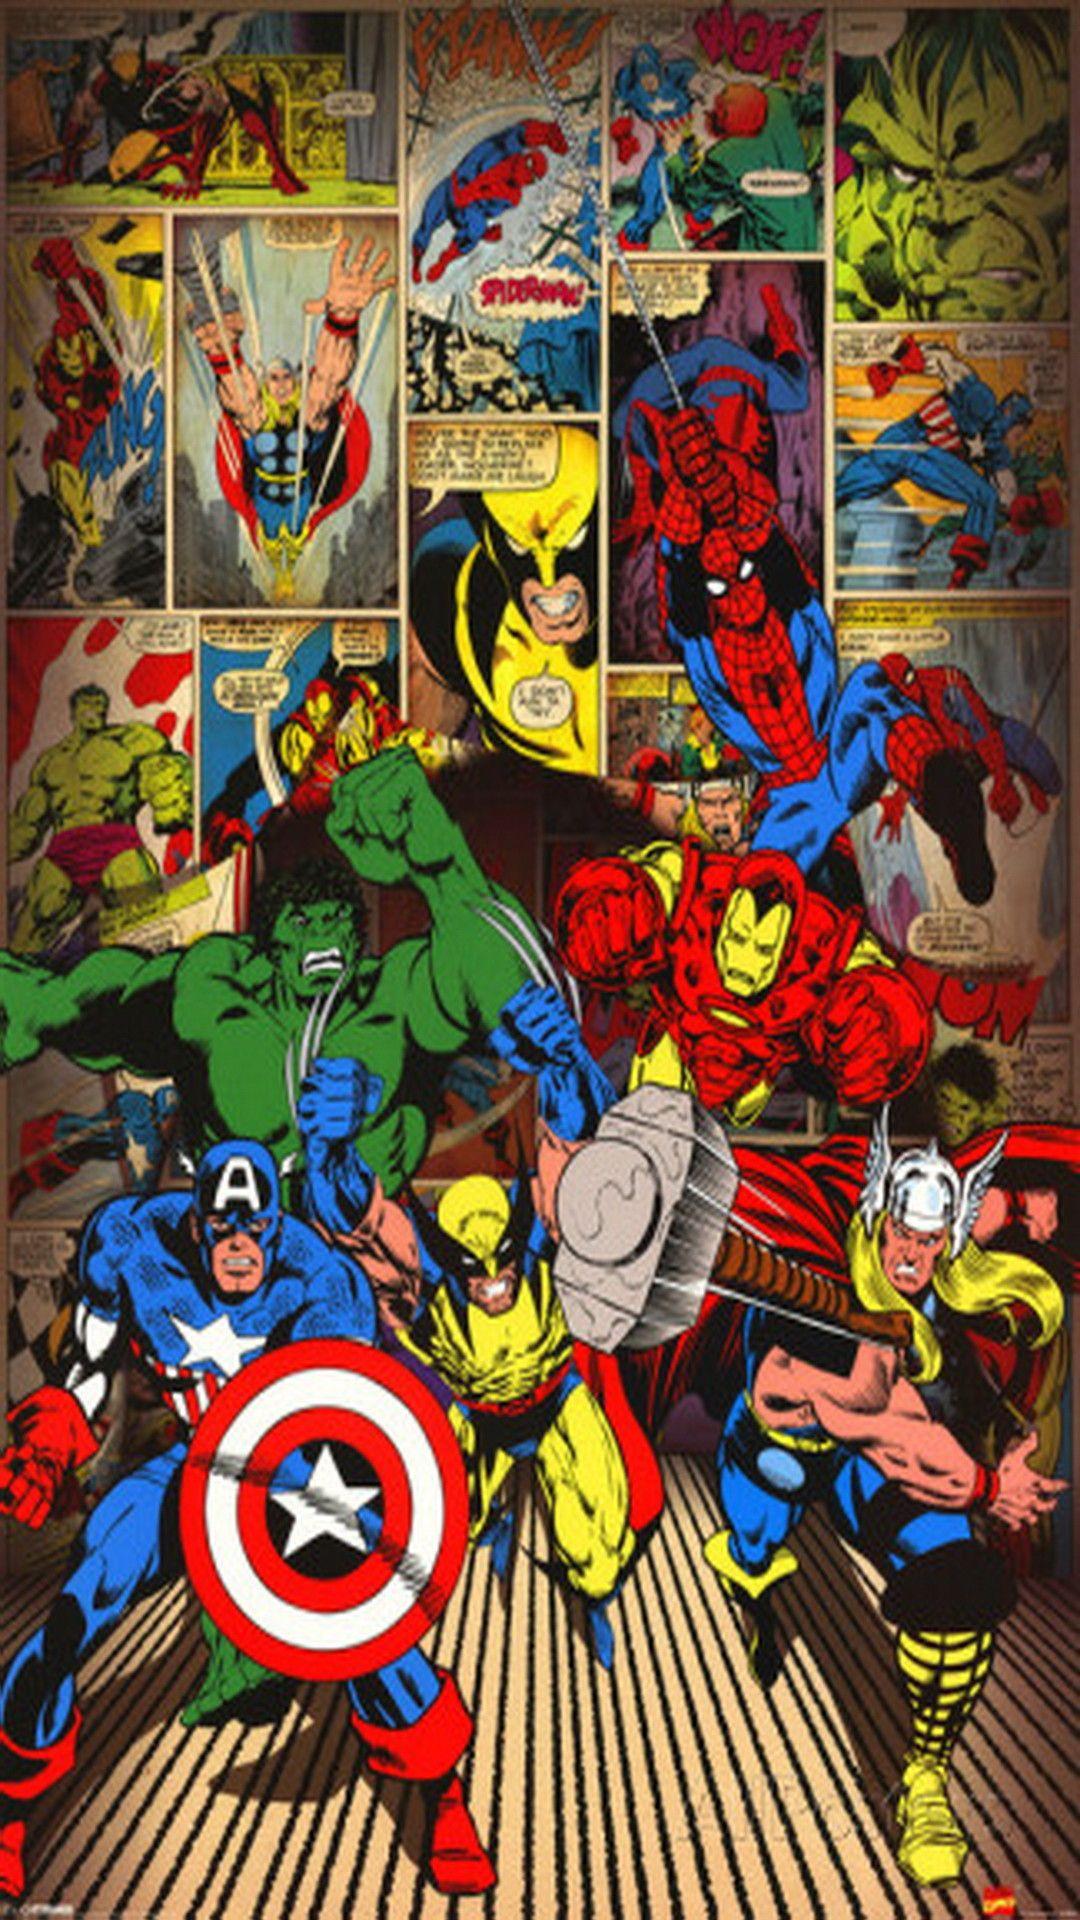 Marvel wallpaper to grab an amazing super hero shirt now